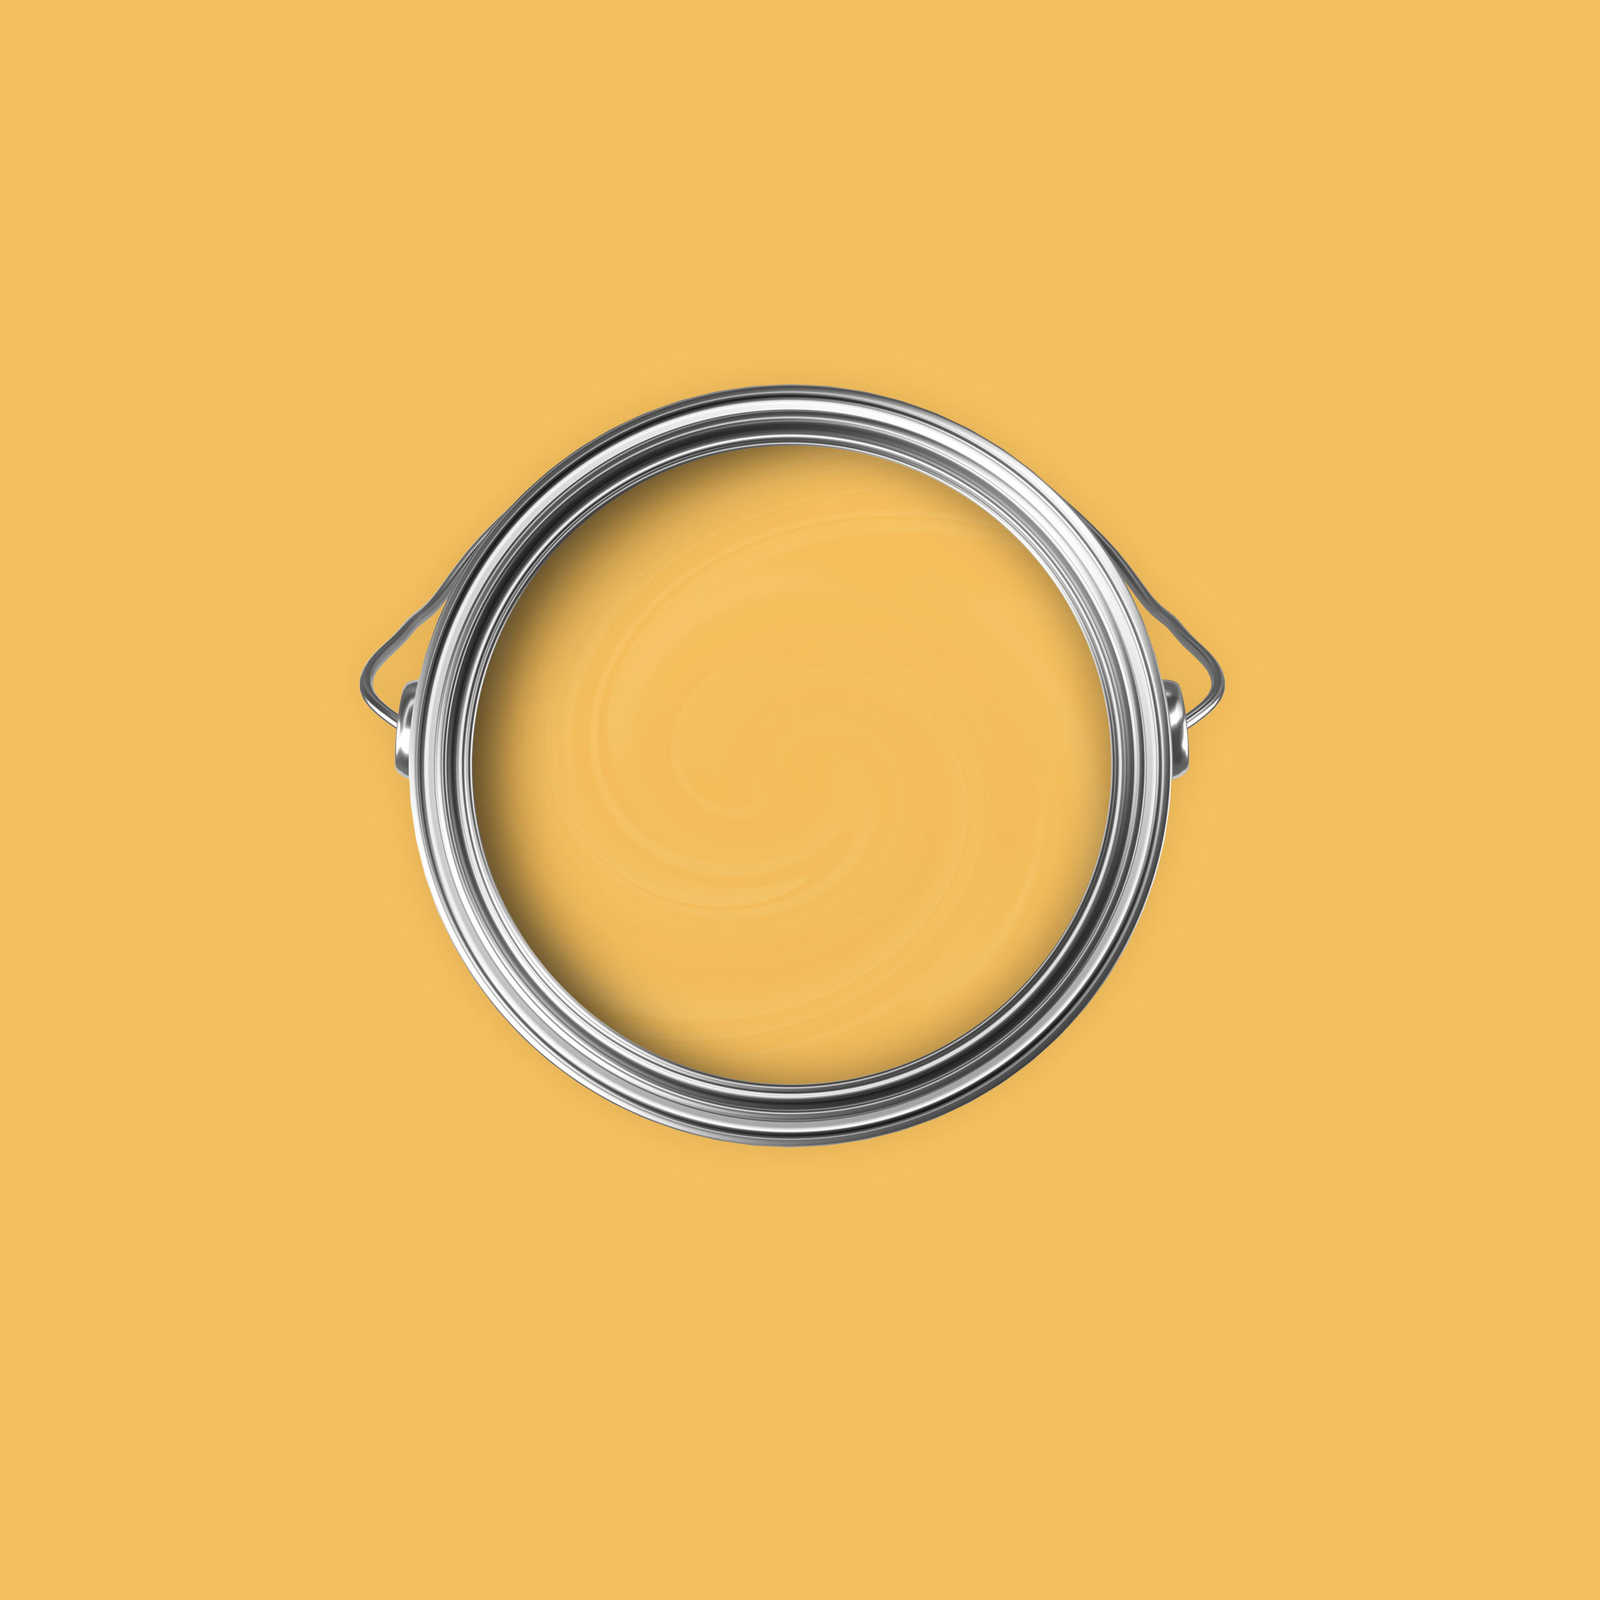             Premium Wandfarbe anregendes Sonnengelb »Juicy Yellow« NW805 – 2,5 Liter
        